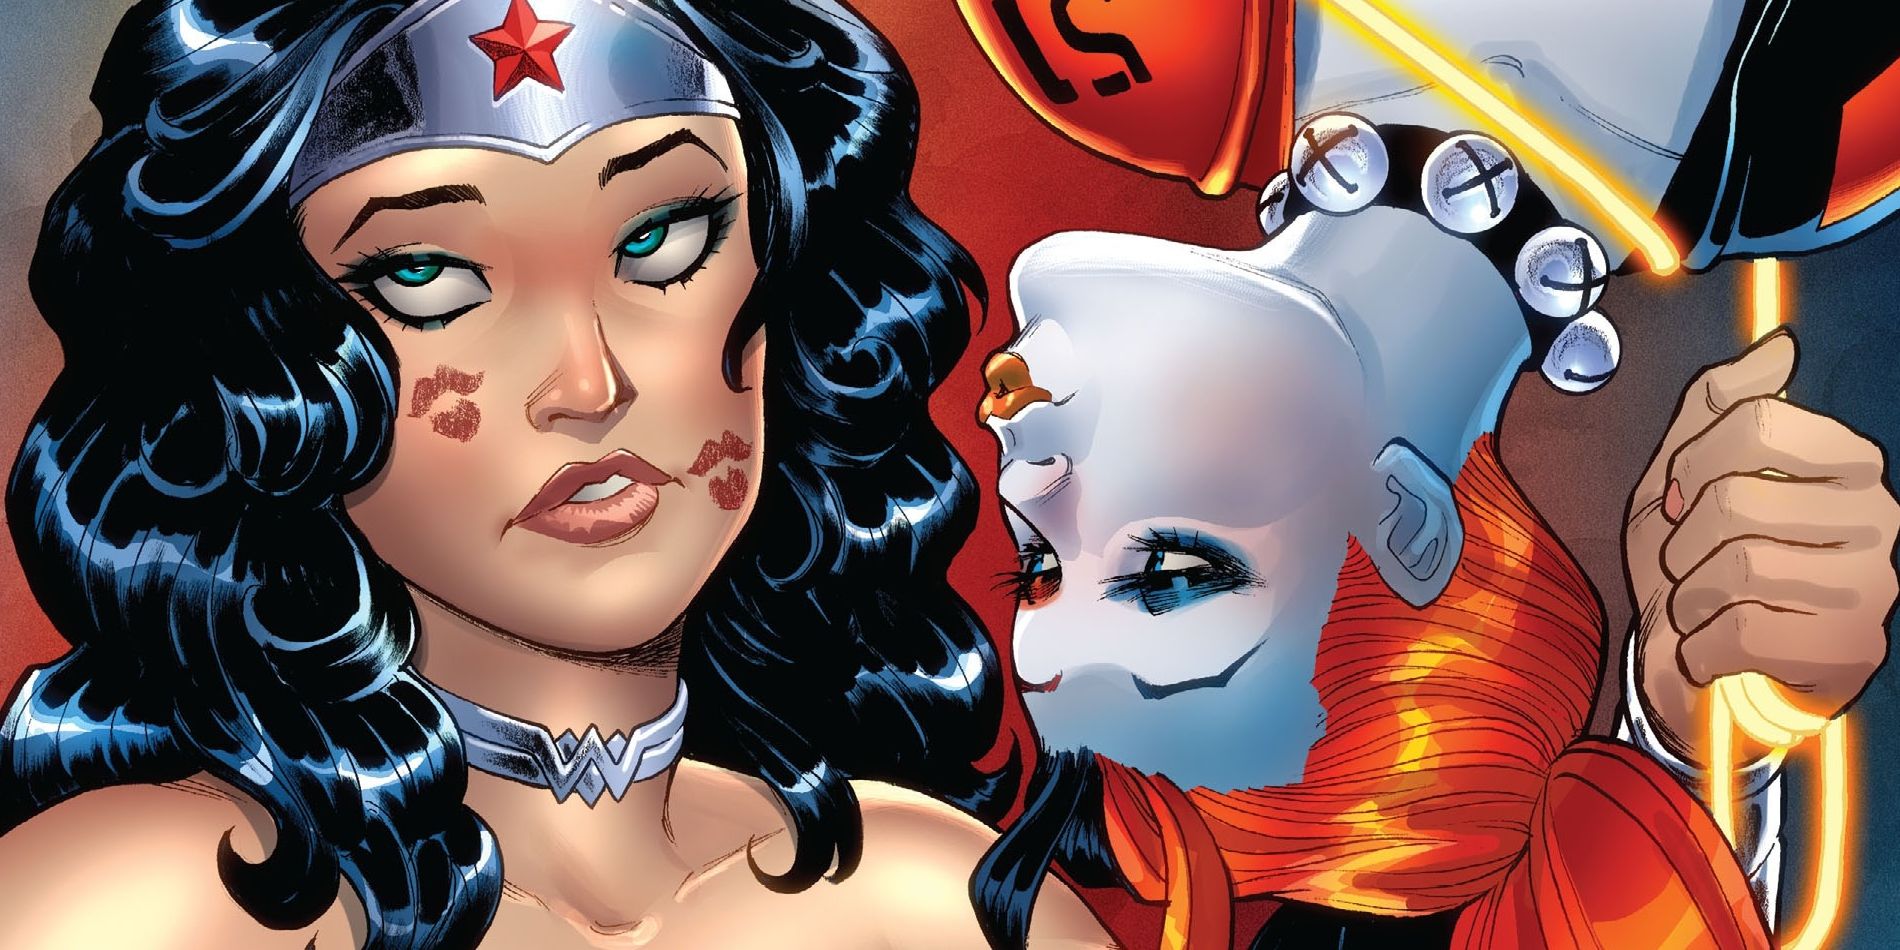 Wonder Woman rolls her eyes as Harley Quinn kisses her cheek in DC Comics